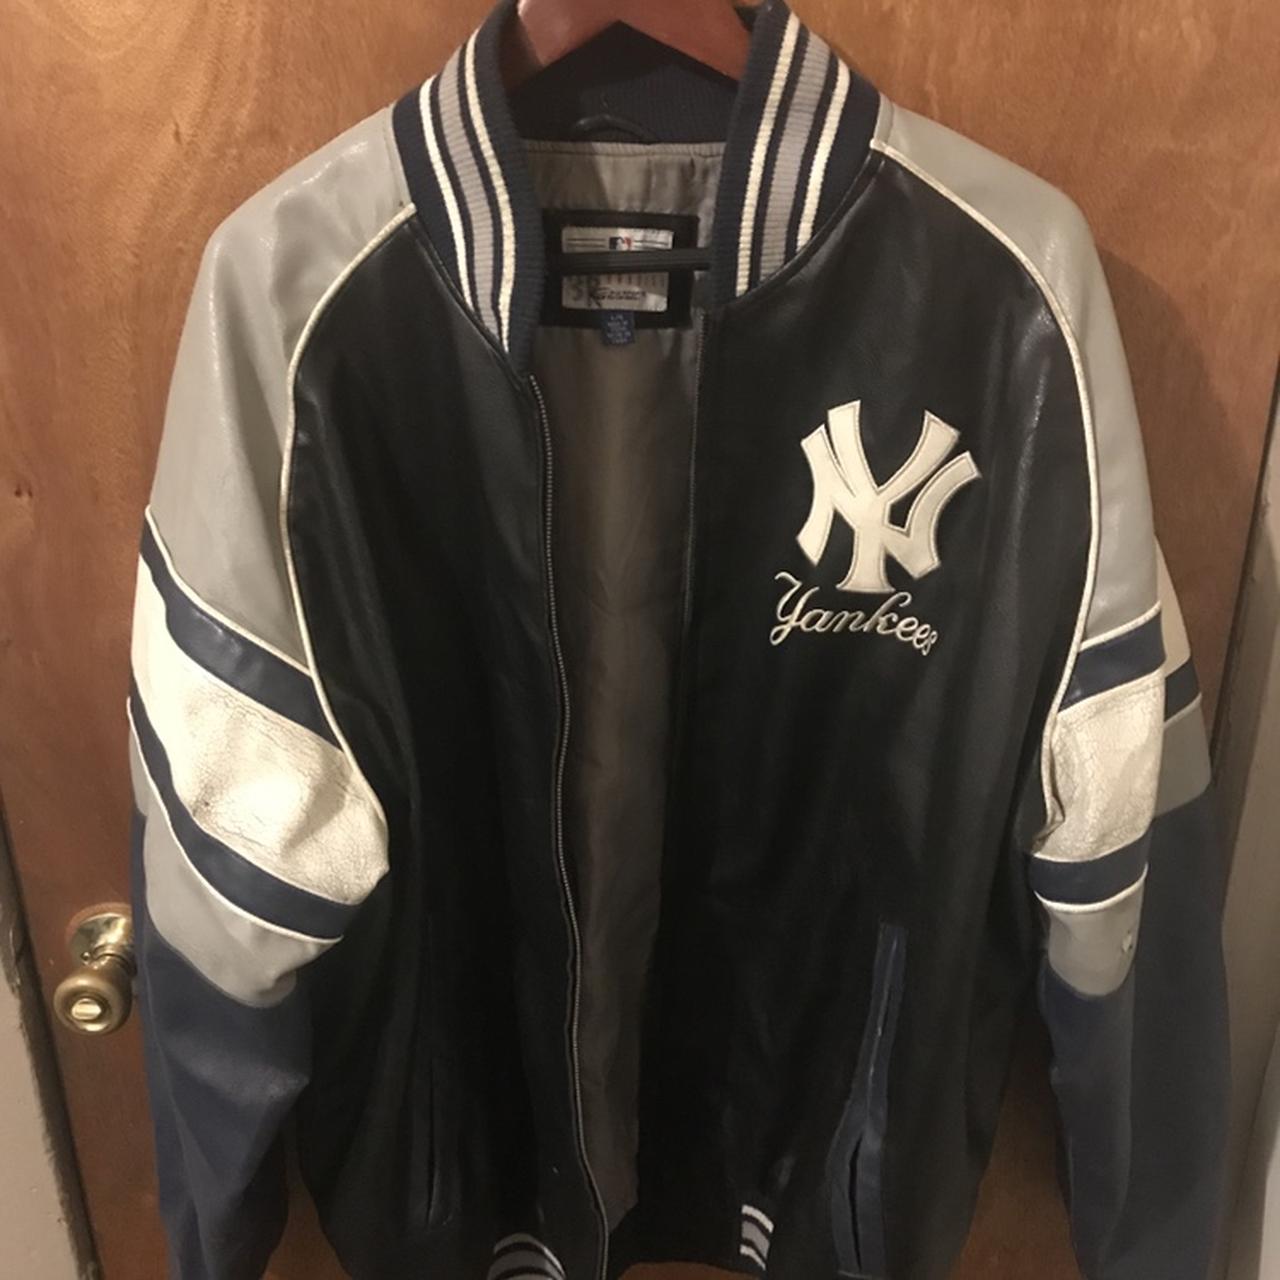 New York yankee leather jacket belonged to my dad...